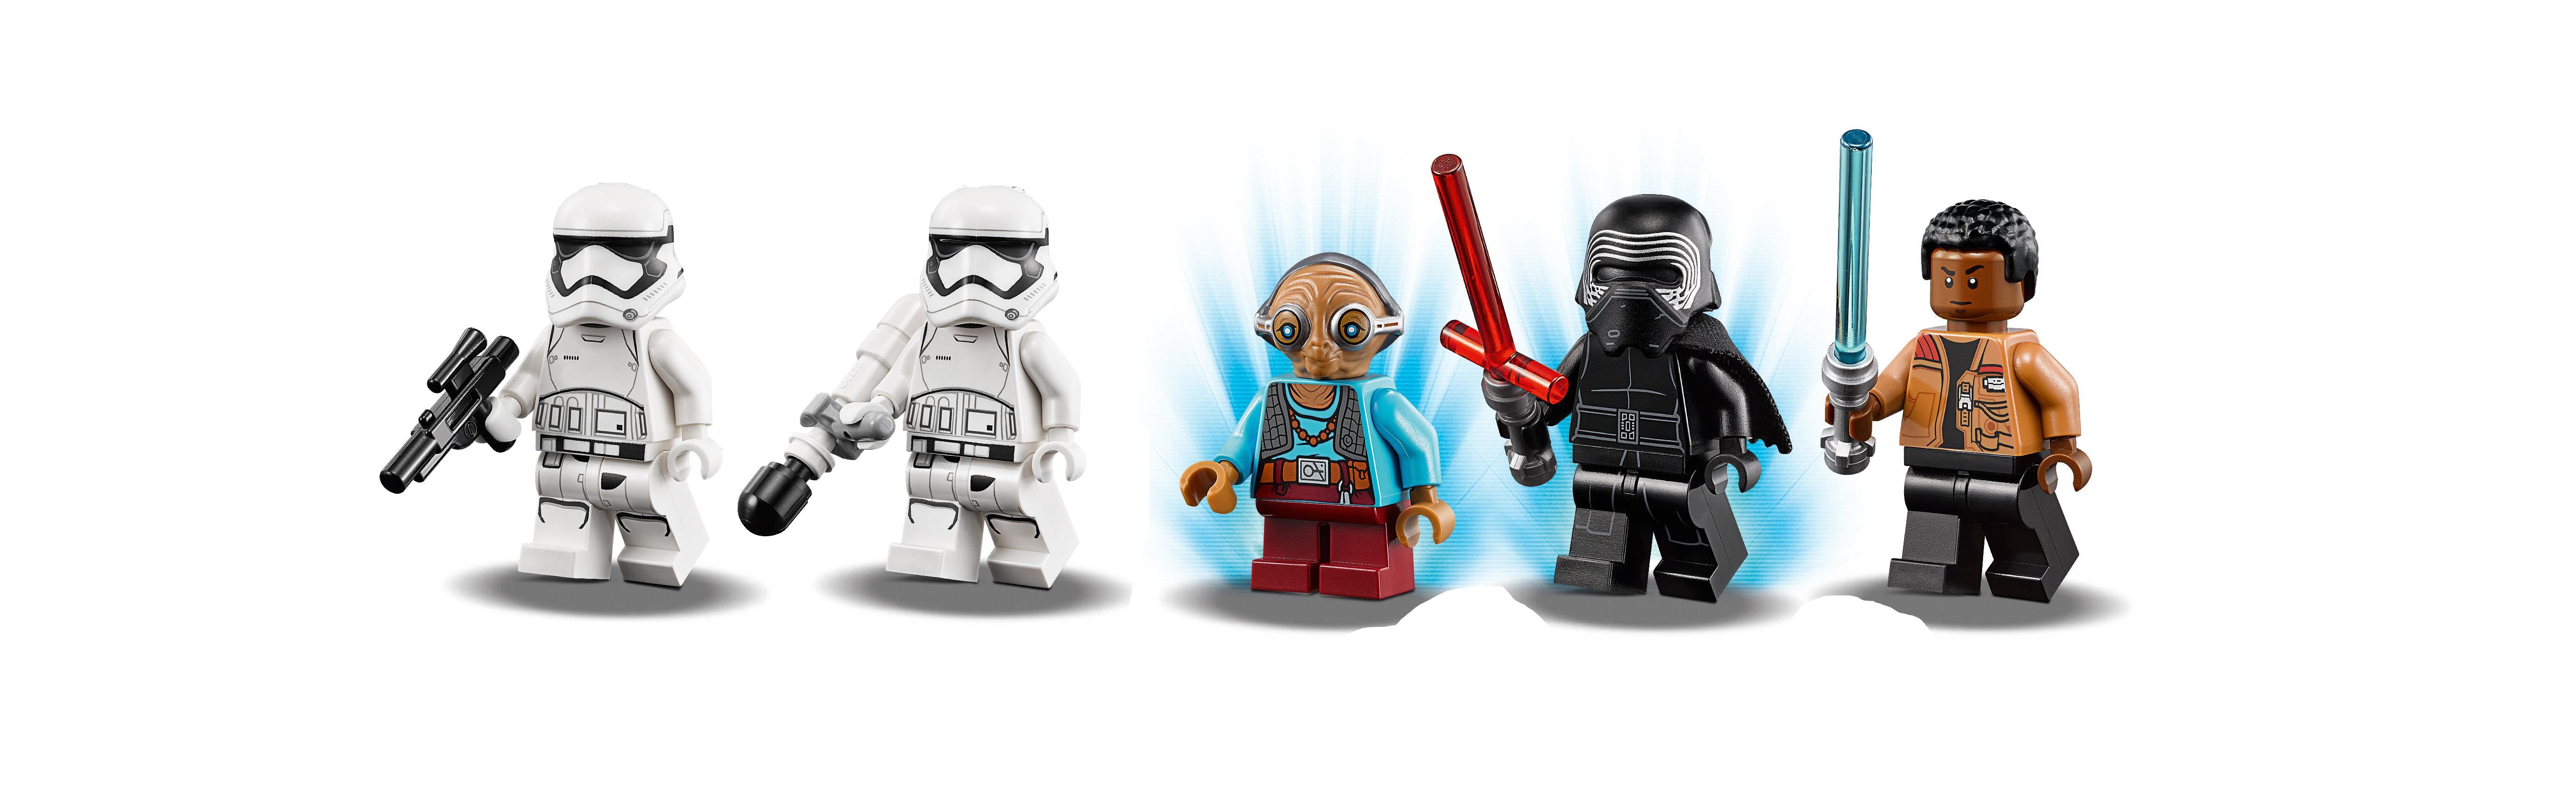 LEGO Star Wars Battle on Takodana - ANB Baby